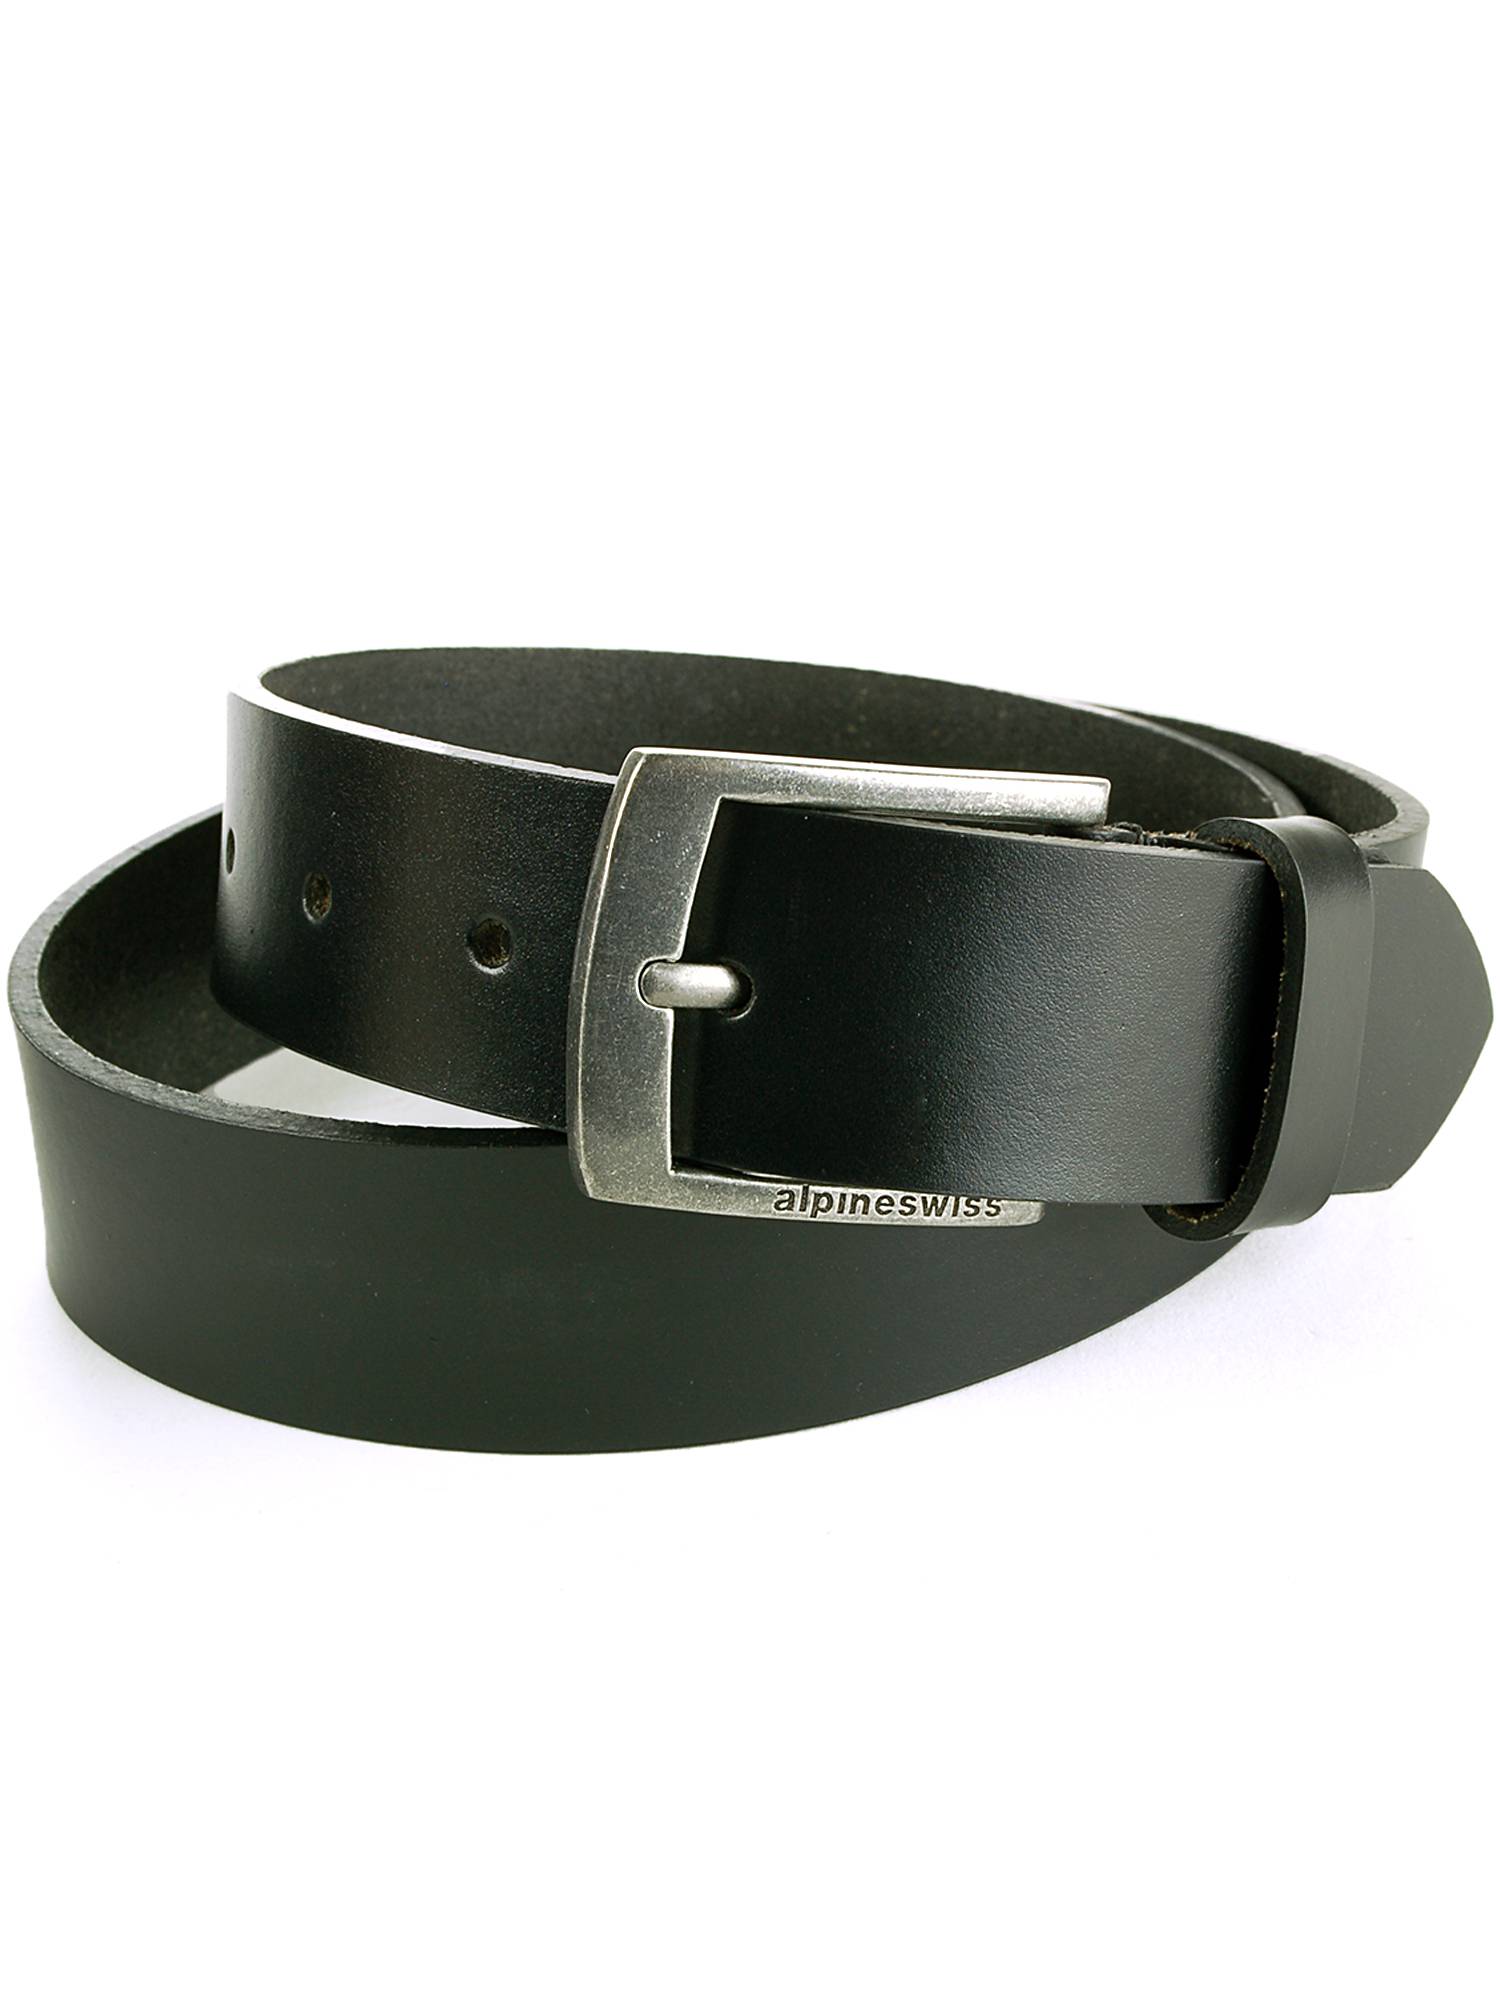 Alpine Swiss Mens Belt Genuine Leather Slim 1.25” Casual Jean Belt Dakota Buckle - image 1 of 6